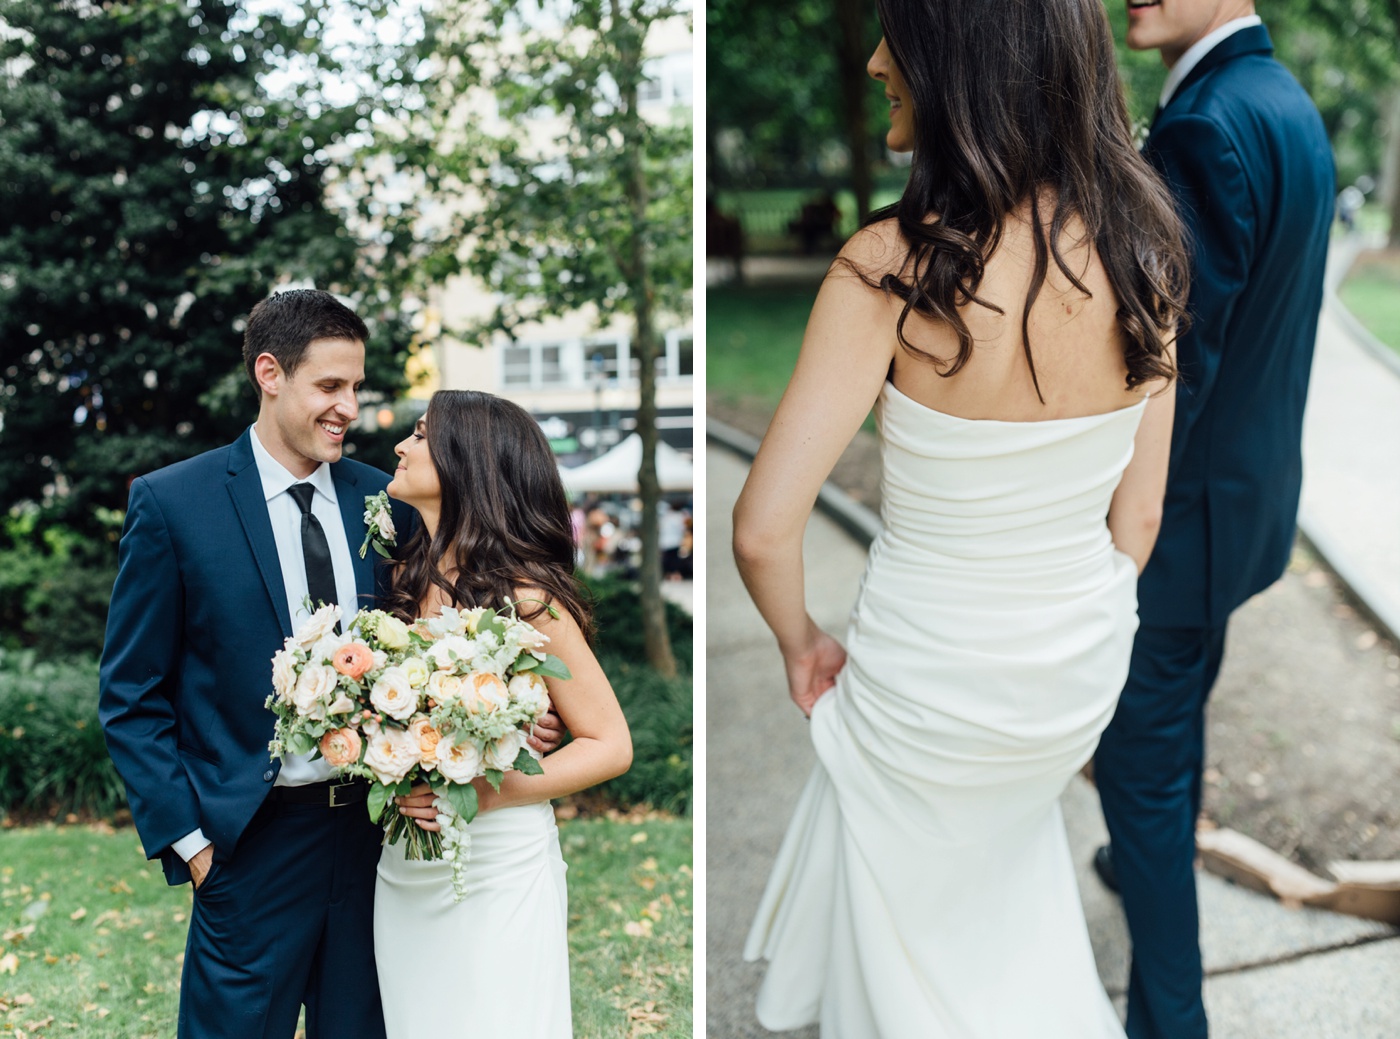 Jessica + Chuck - Rittenhouse Square First Look - Philadelphia Wedding Photographer - Alison Dunn Photography photo